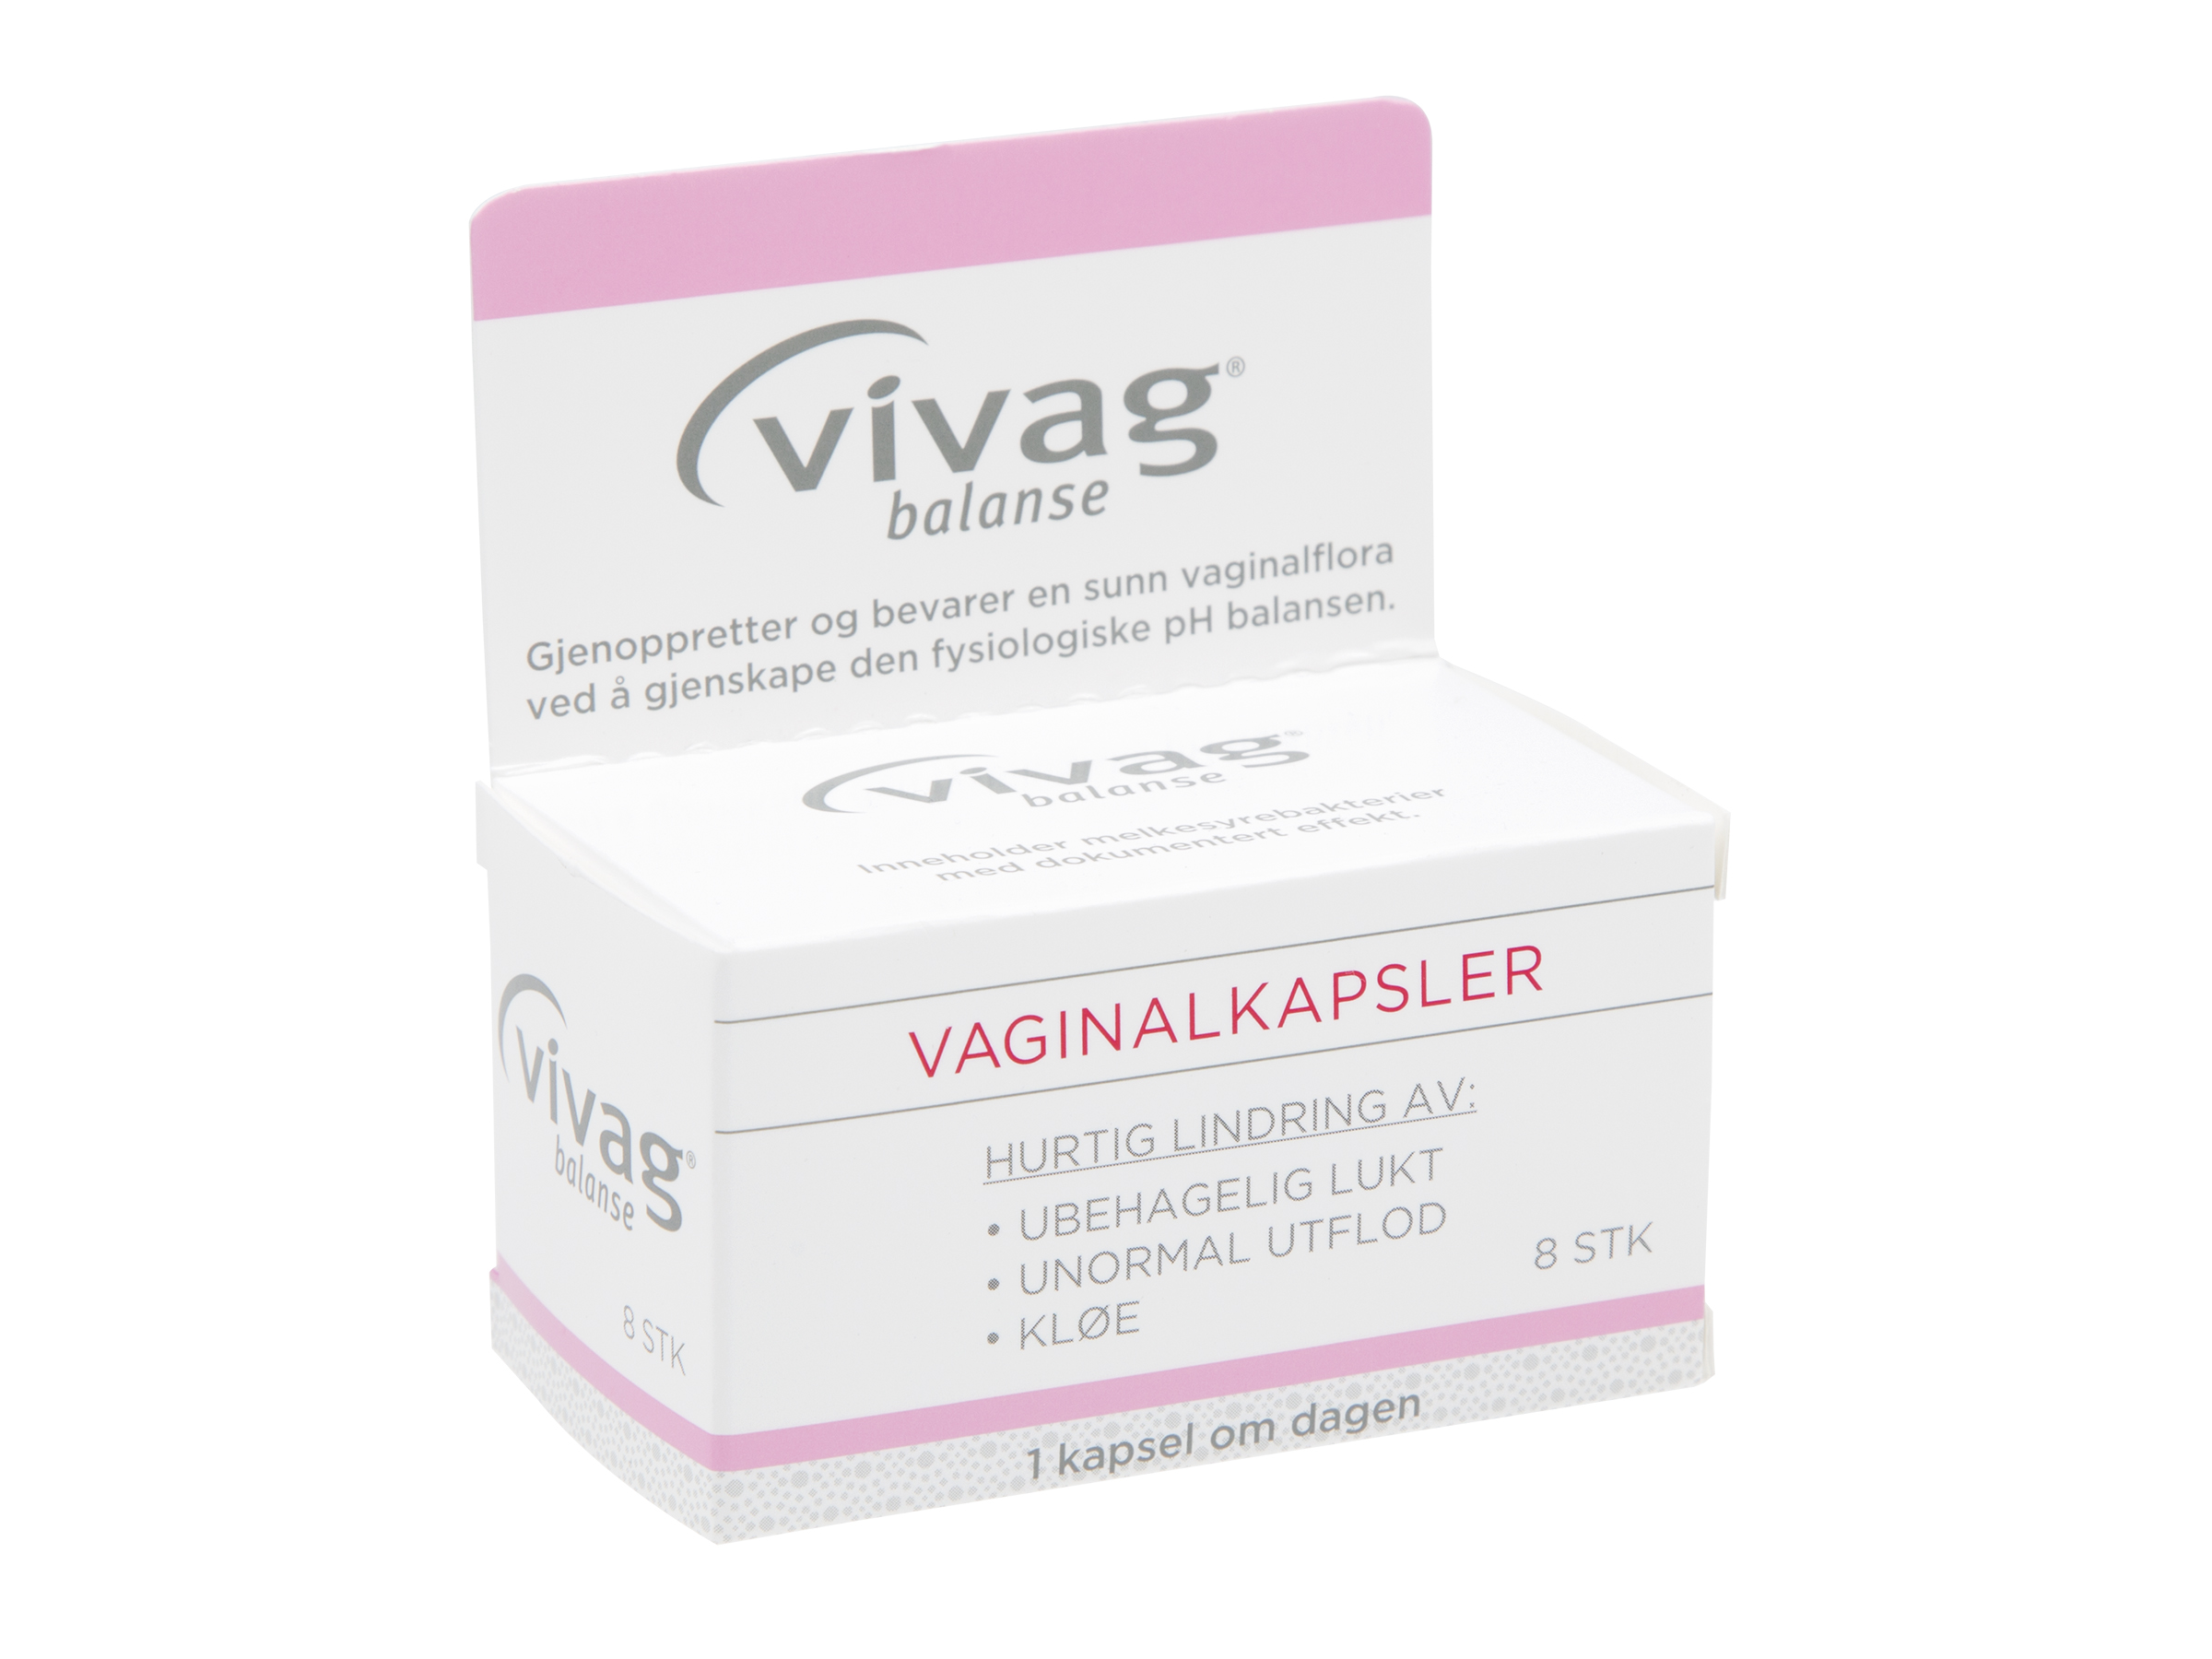 Vivag Balanse Vaginalkapsler, 8 stk